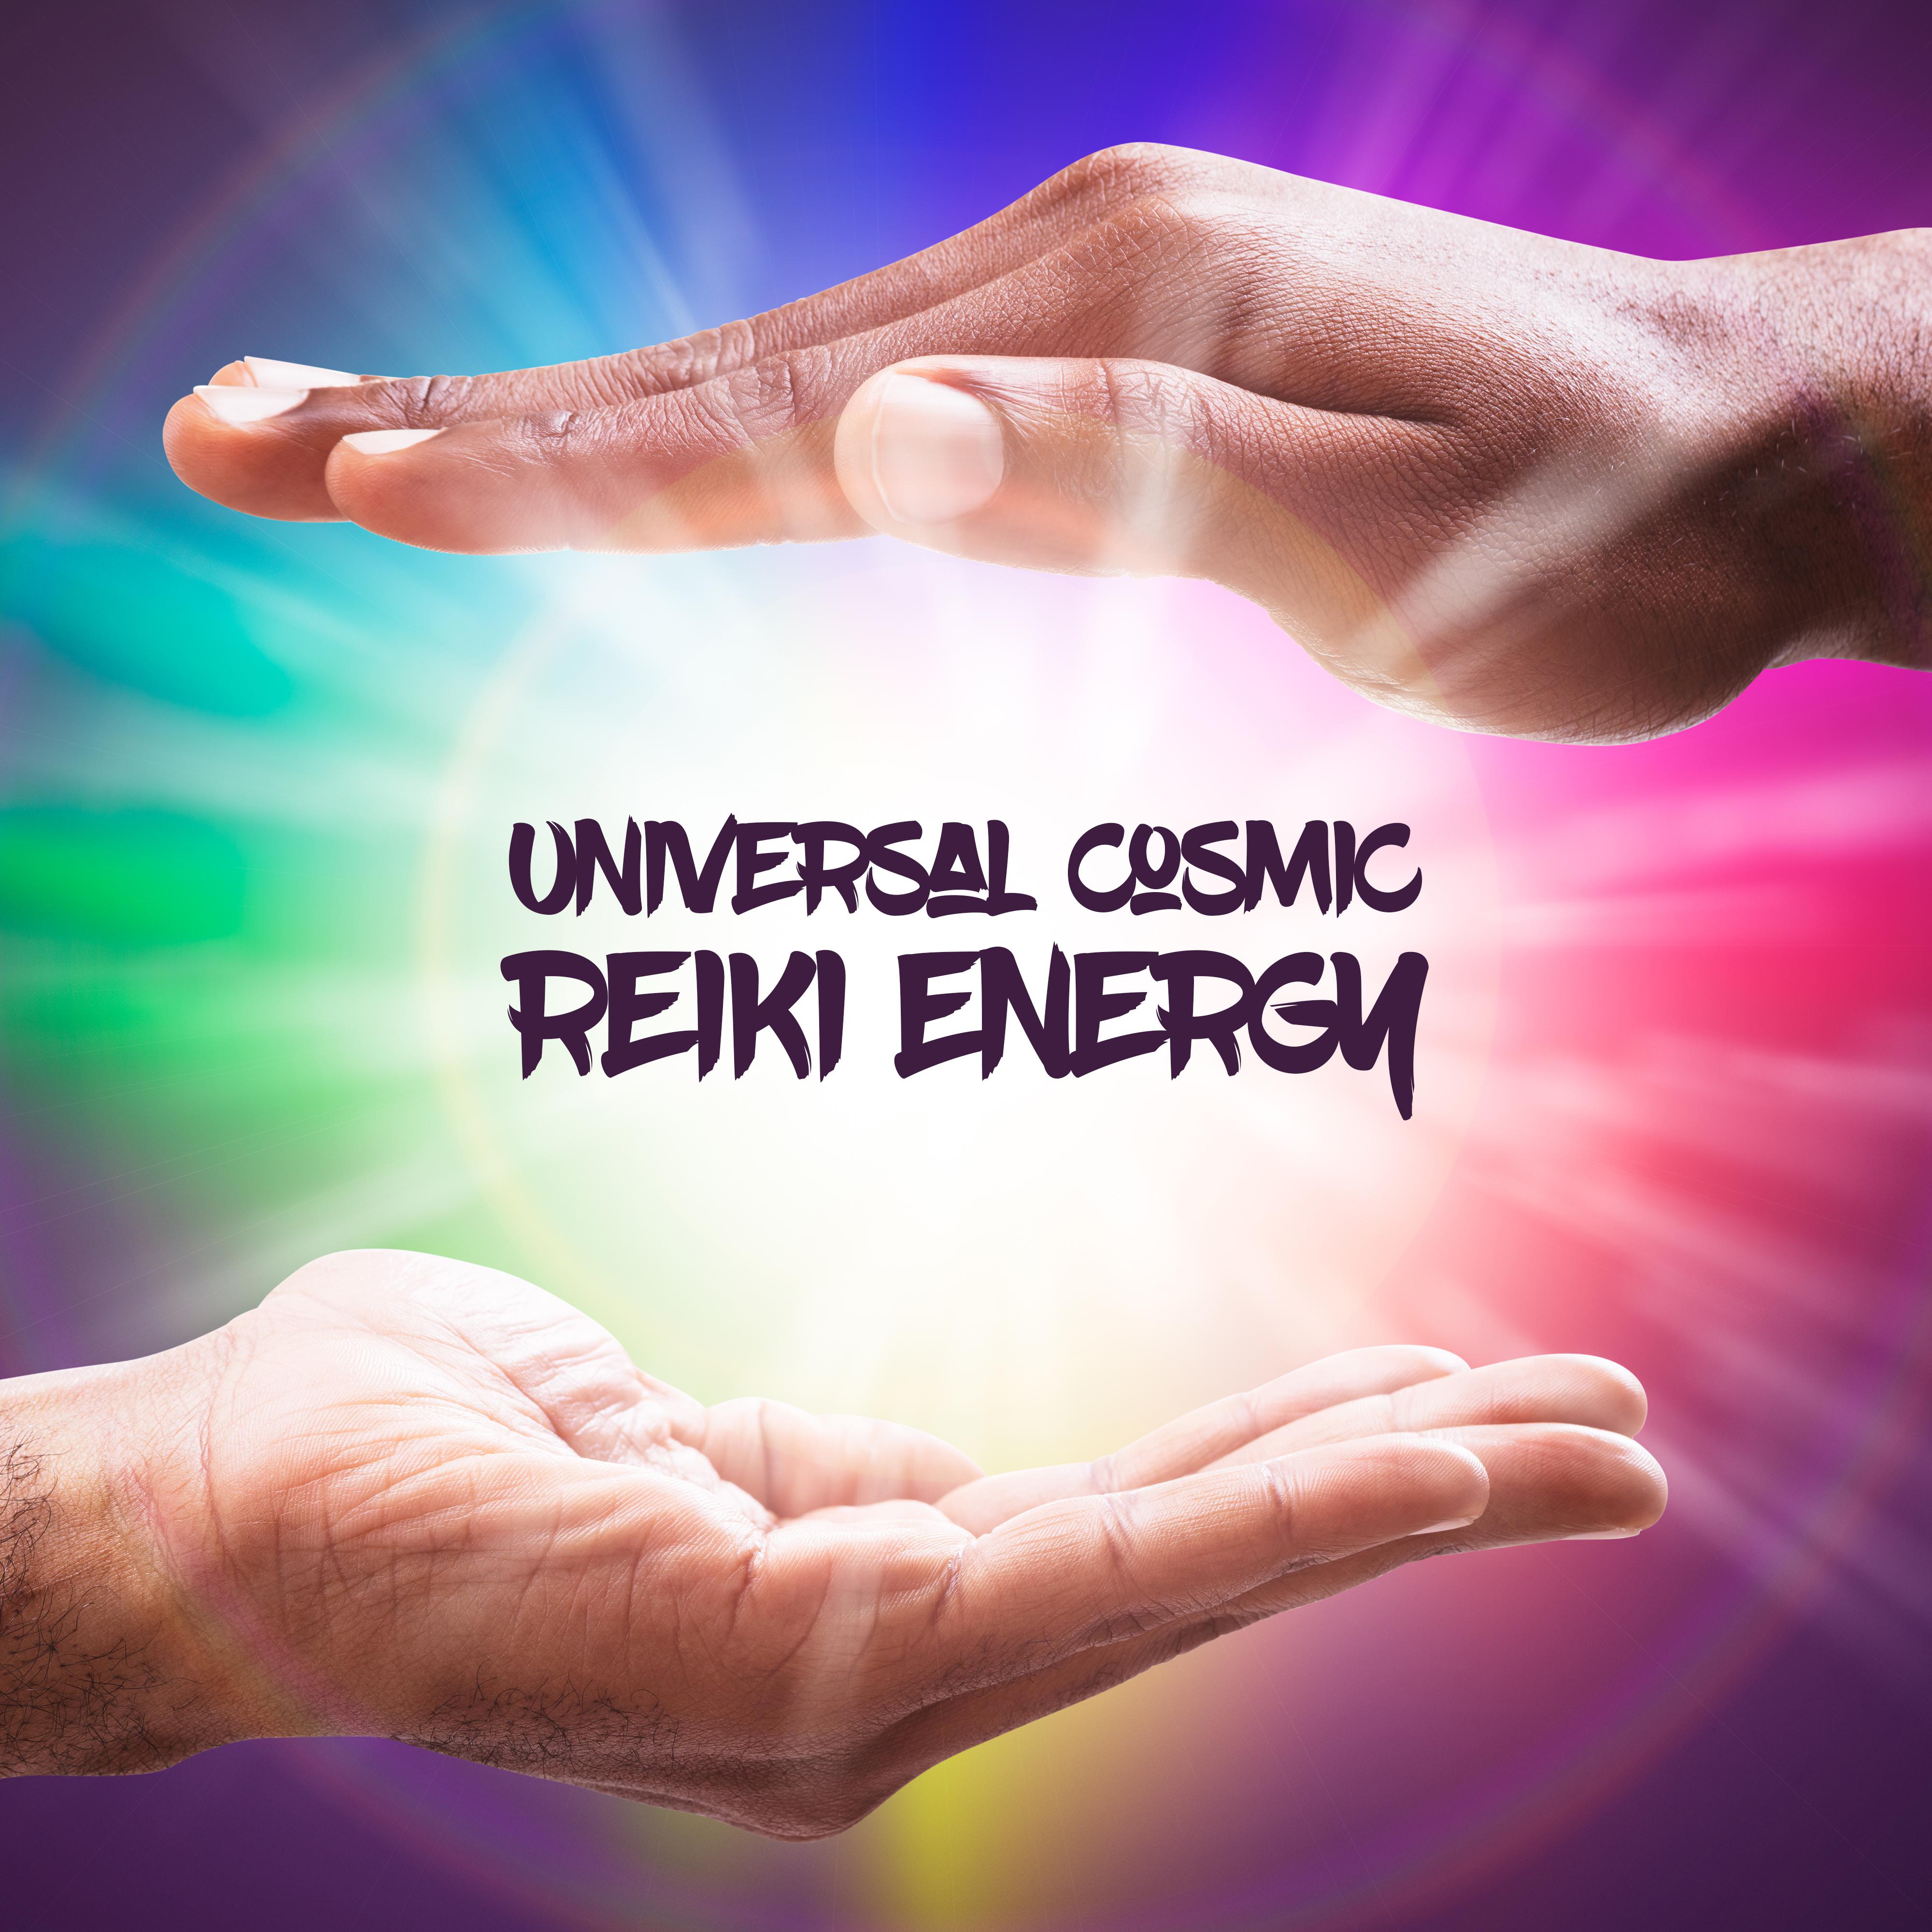 Universal Cosmic Reiki Energy - Music for Treatment, Meditation and Spa